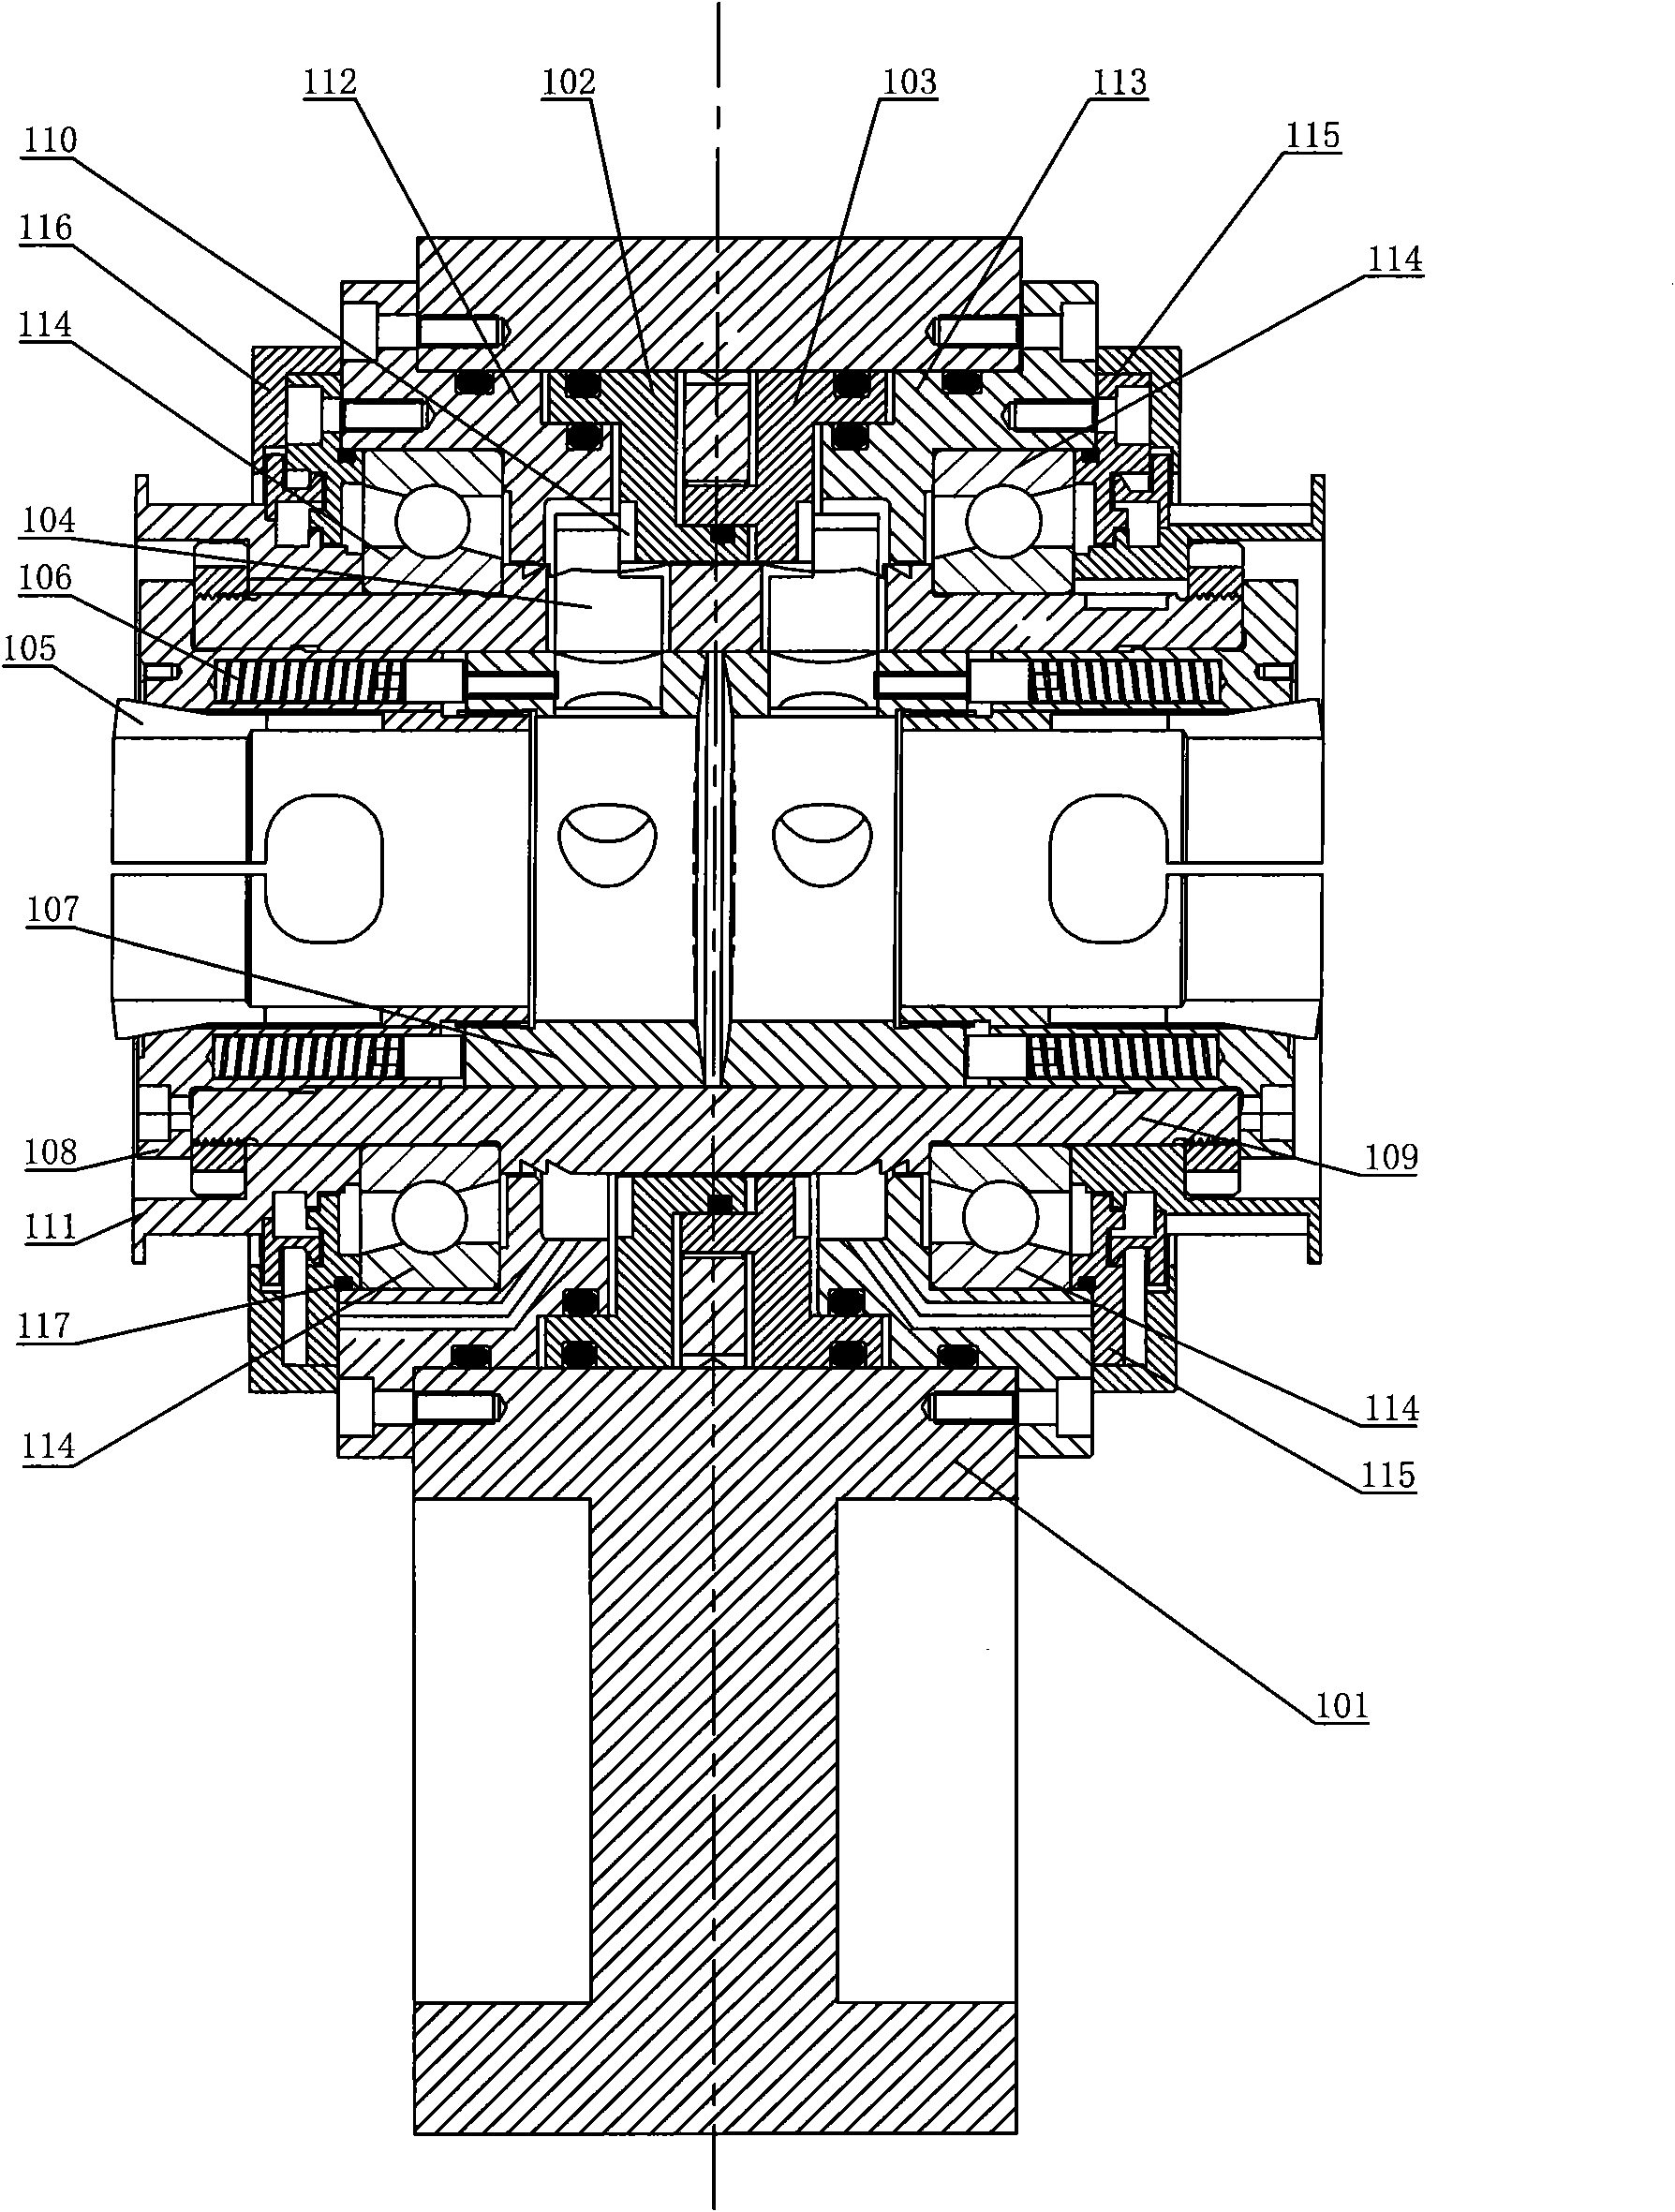 CNC (computerized numerical control) lathe